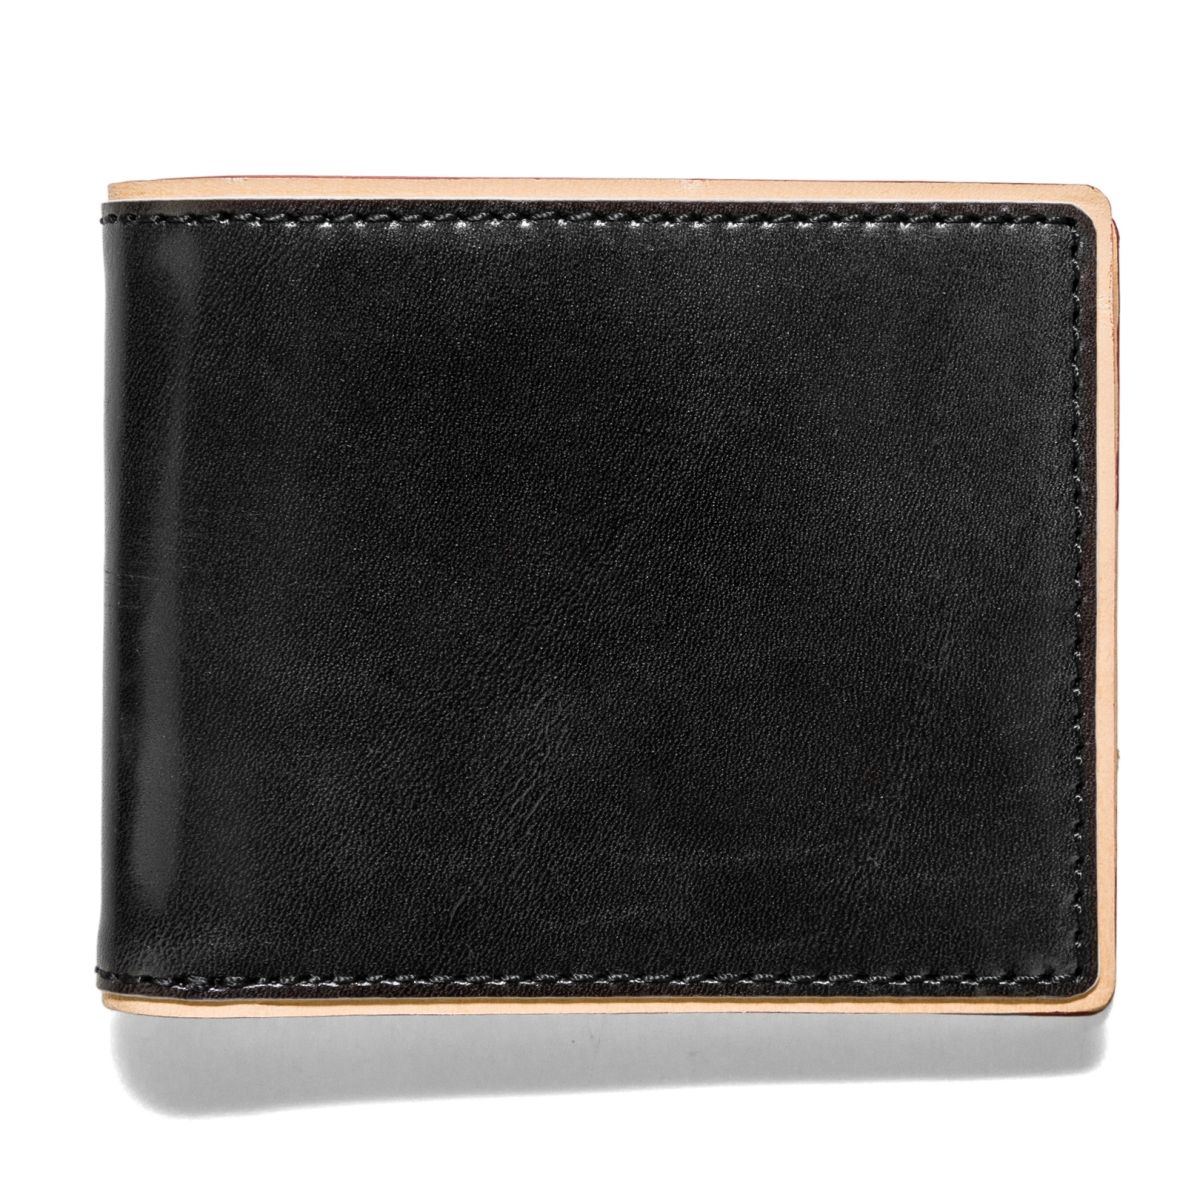 J.FOLD DUOTONE Leather Wallet - Black